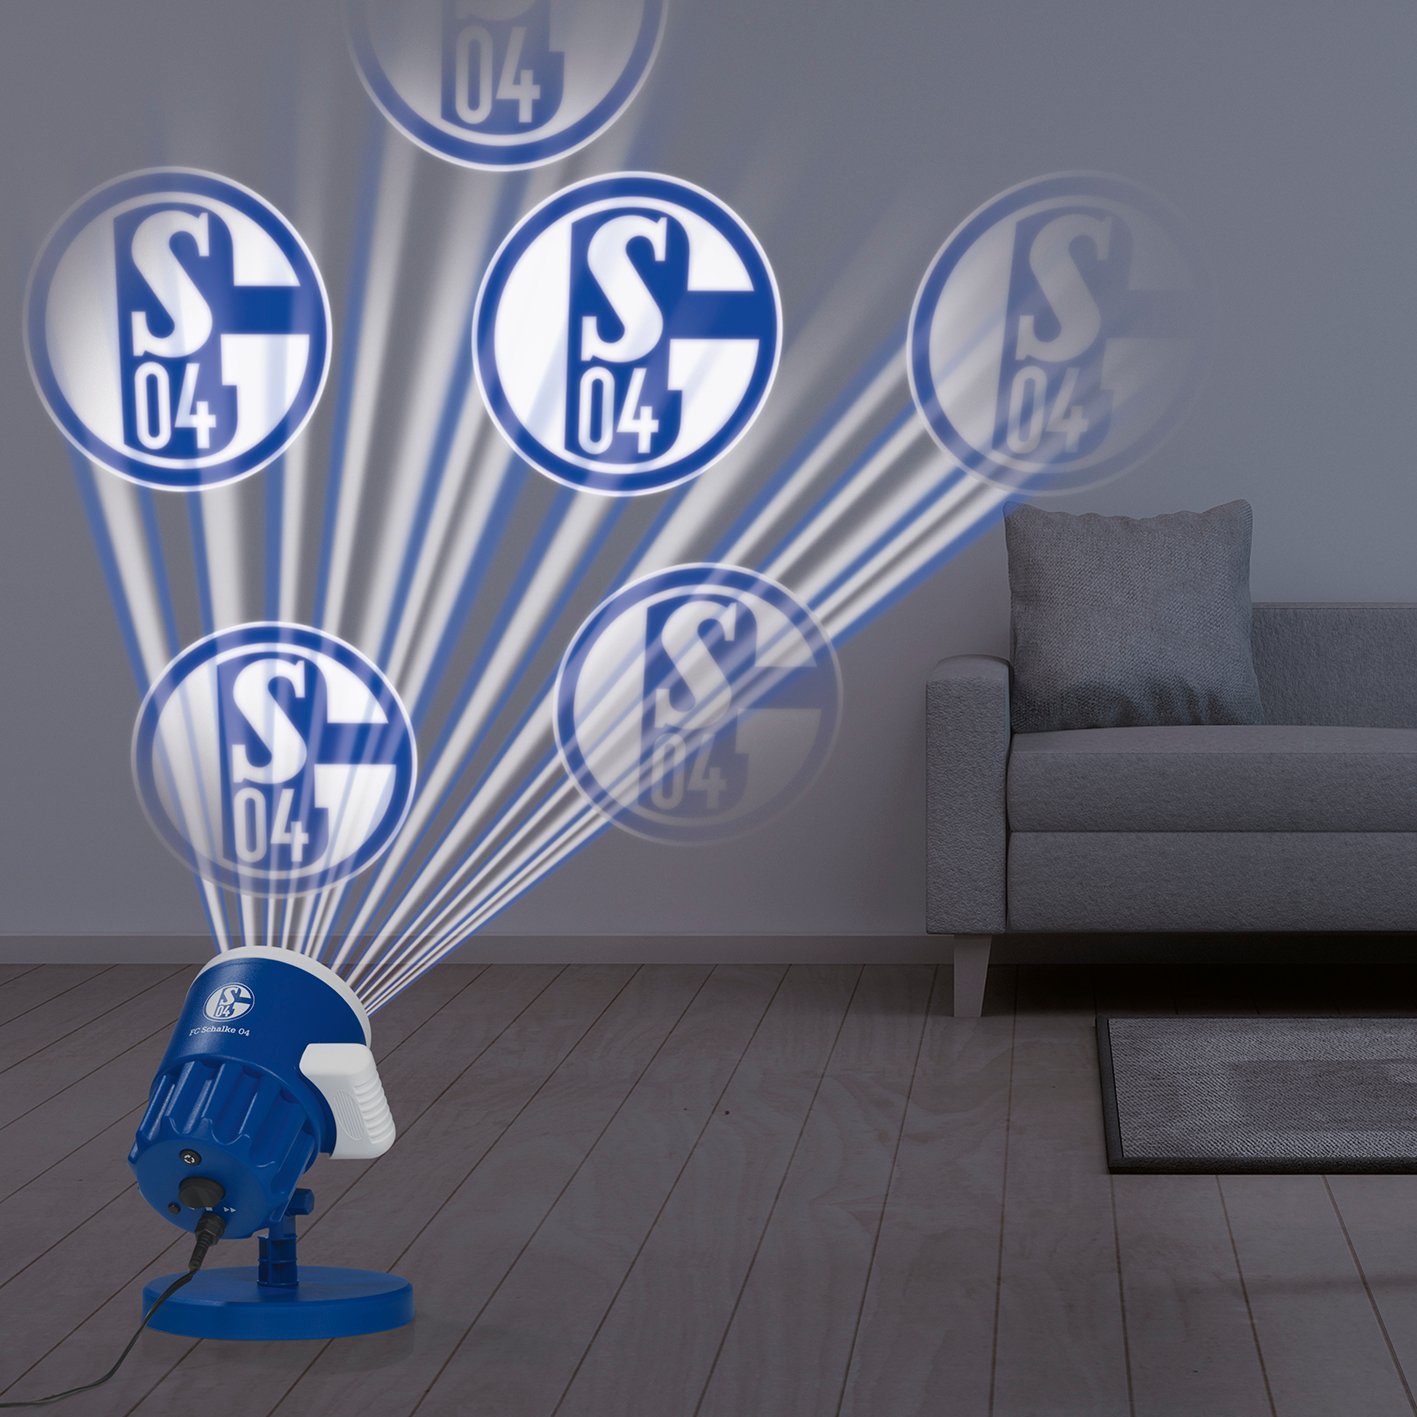 Motivstrahler, LED Schalke 04 Logo mit